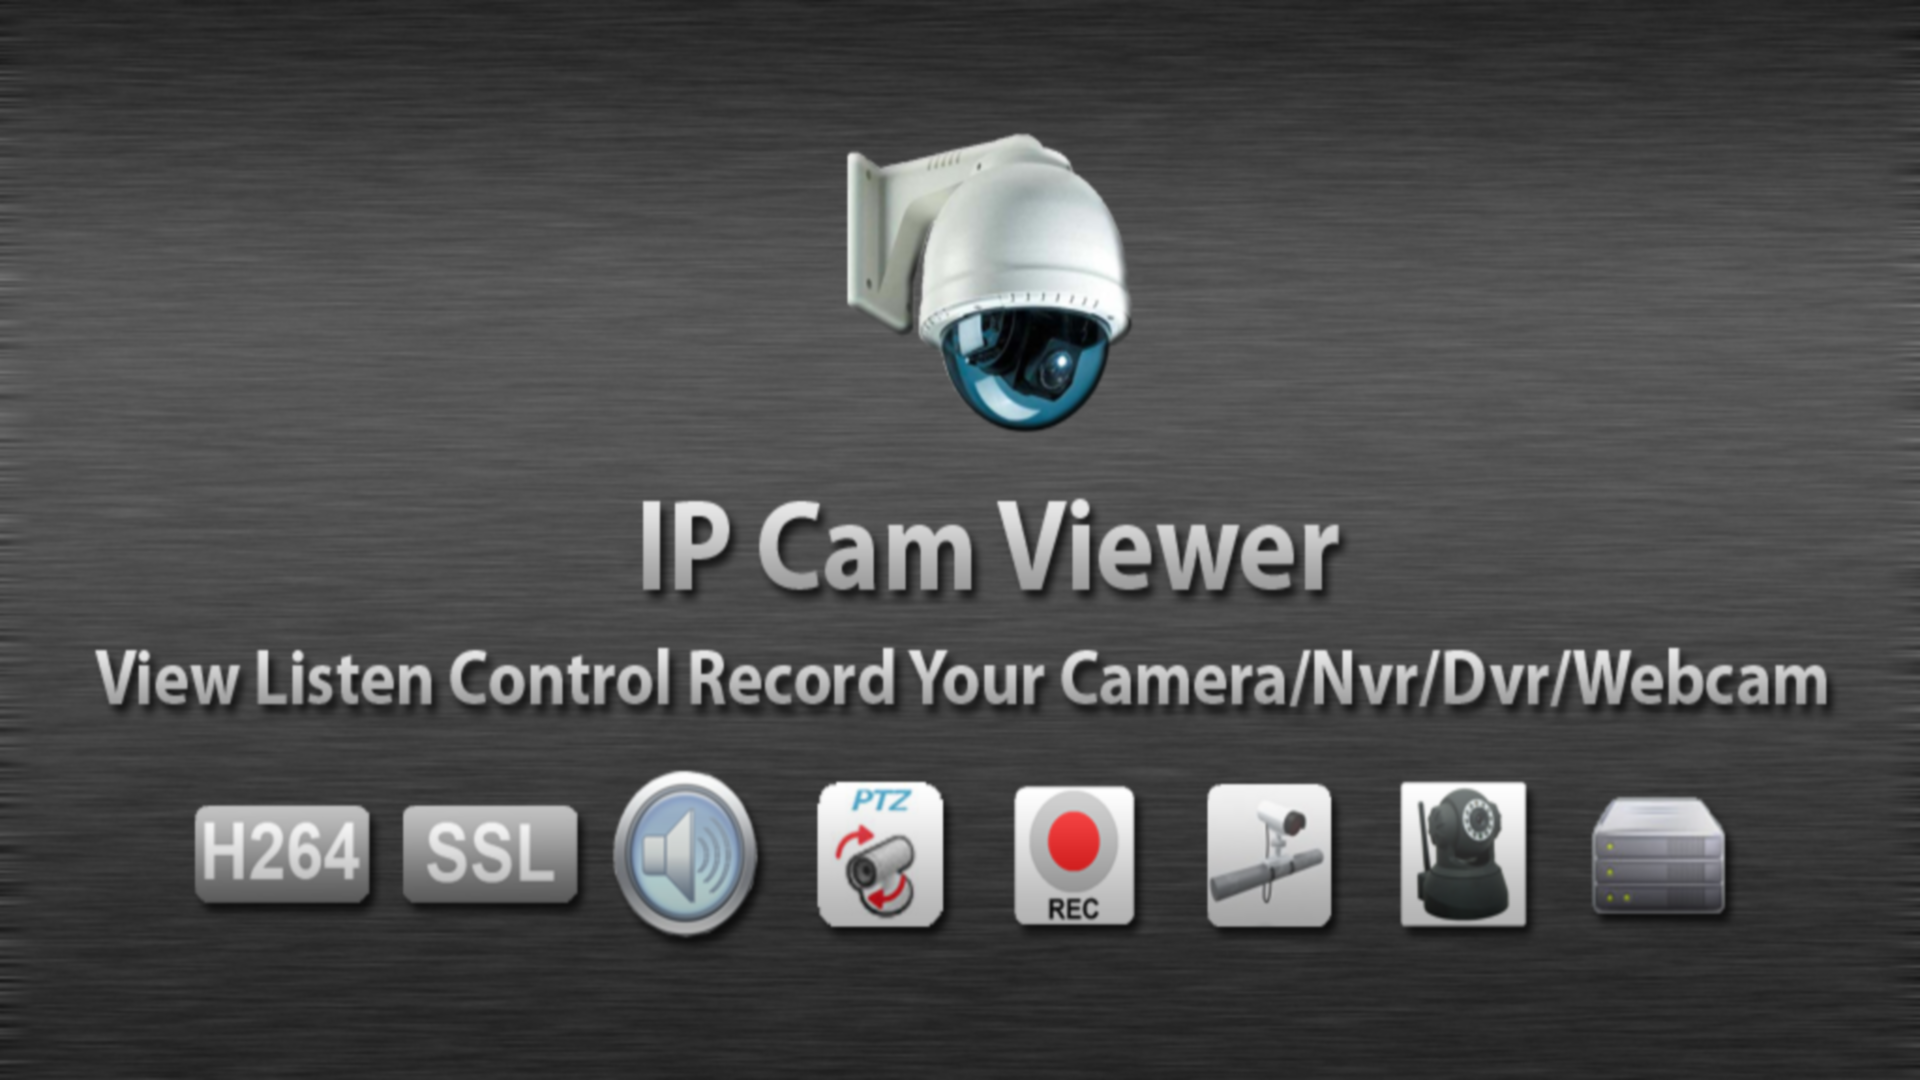 Panasonic Free Ip Camera Viewer Software For Mac